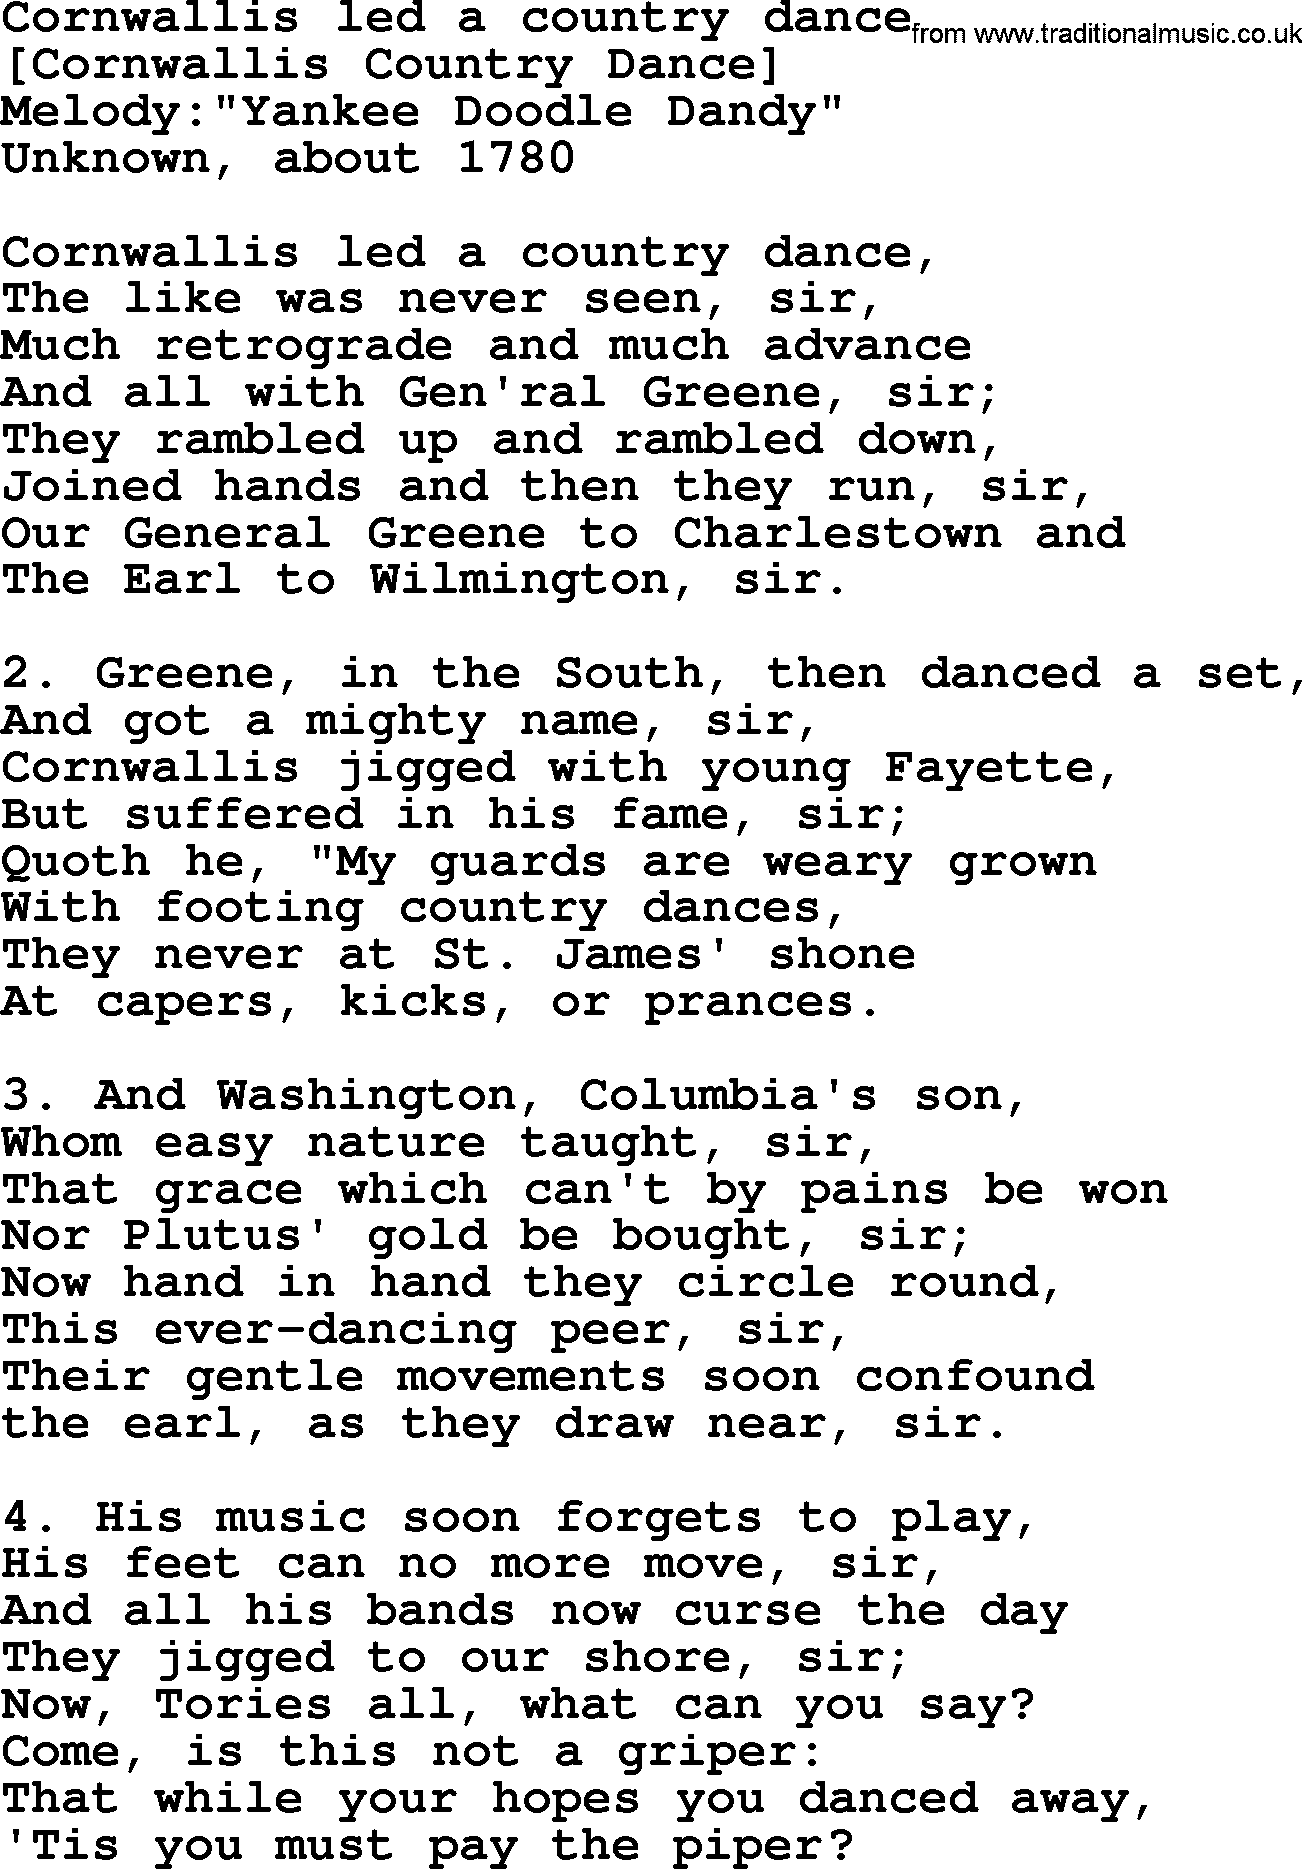 Old American Song: Cornwallis Led A Country Dance, lyrics